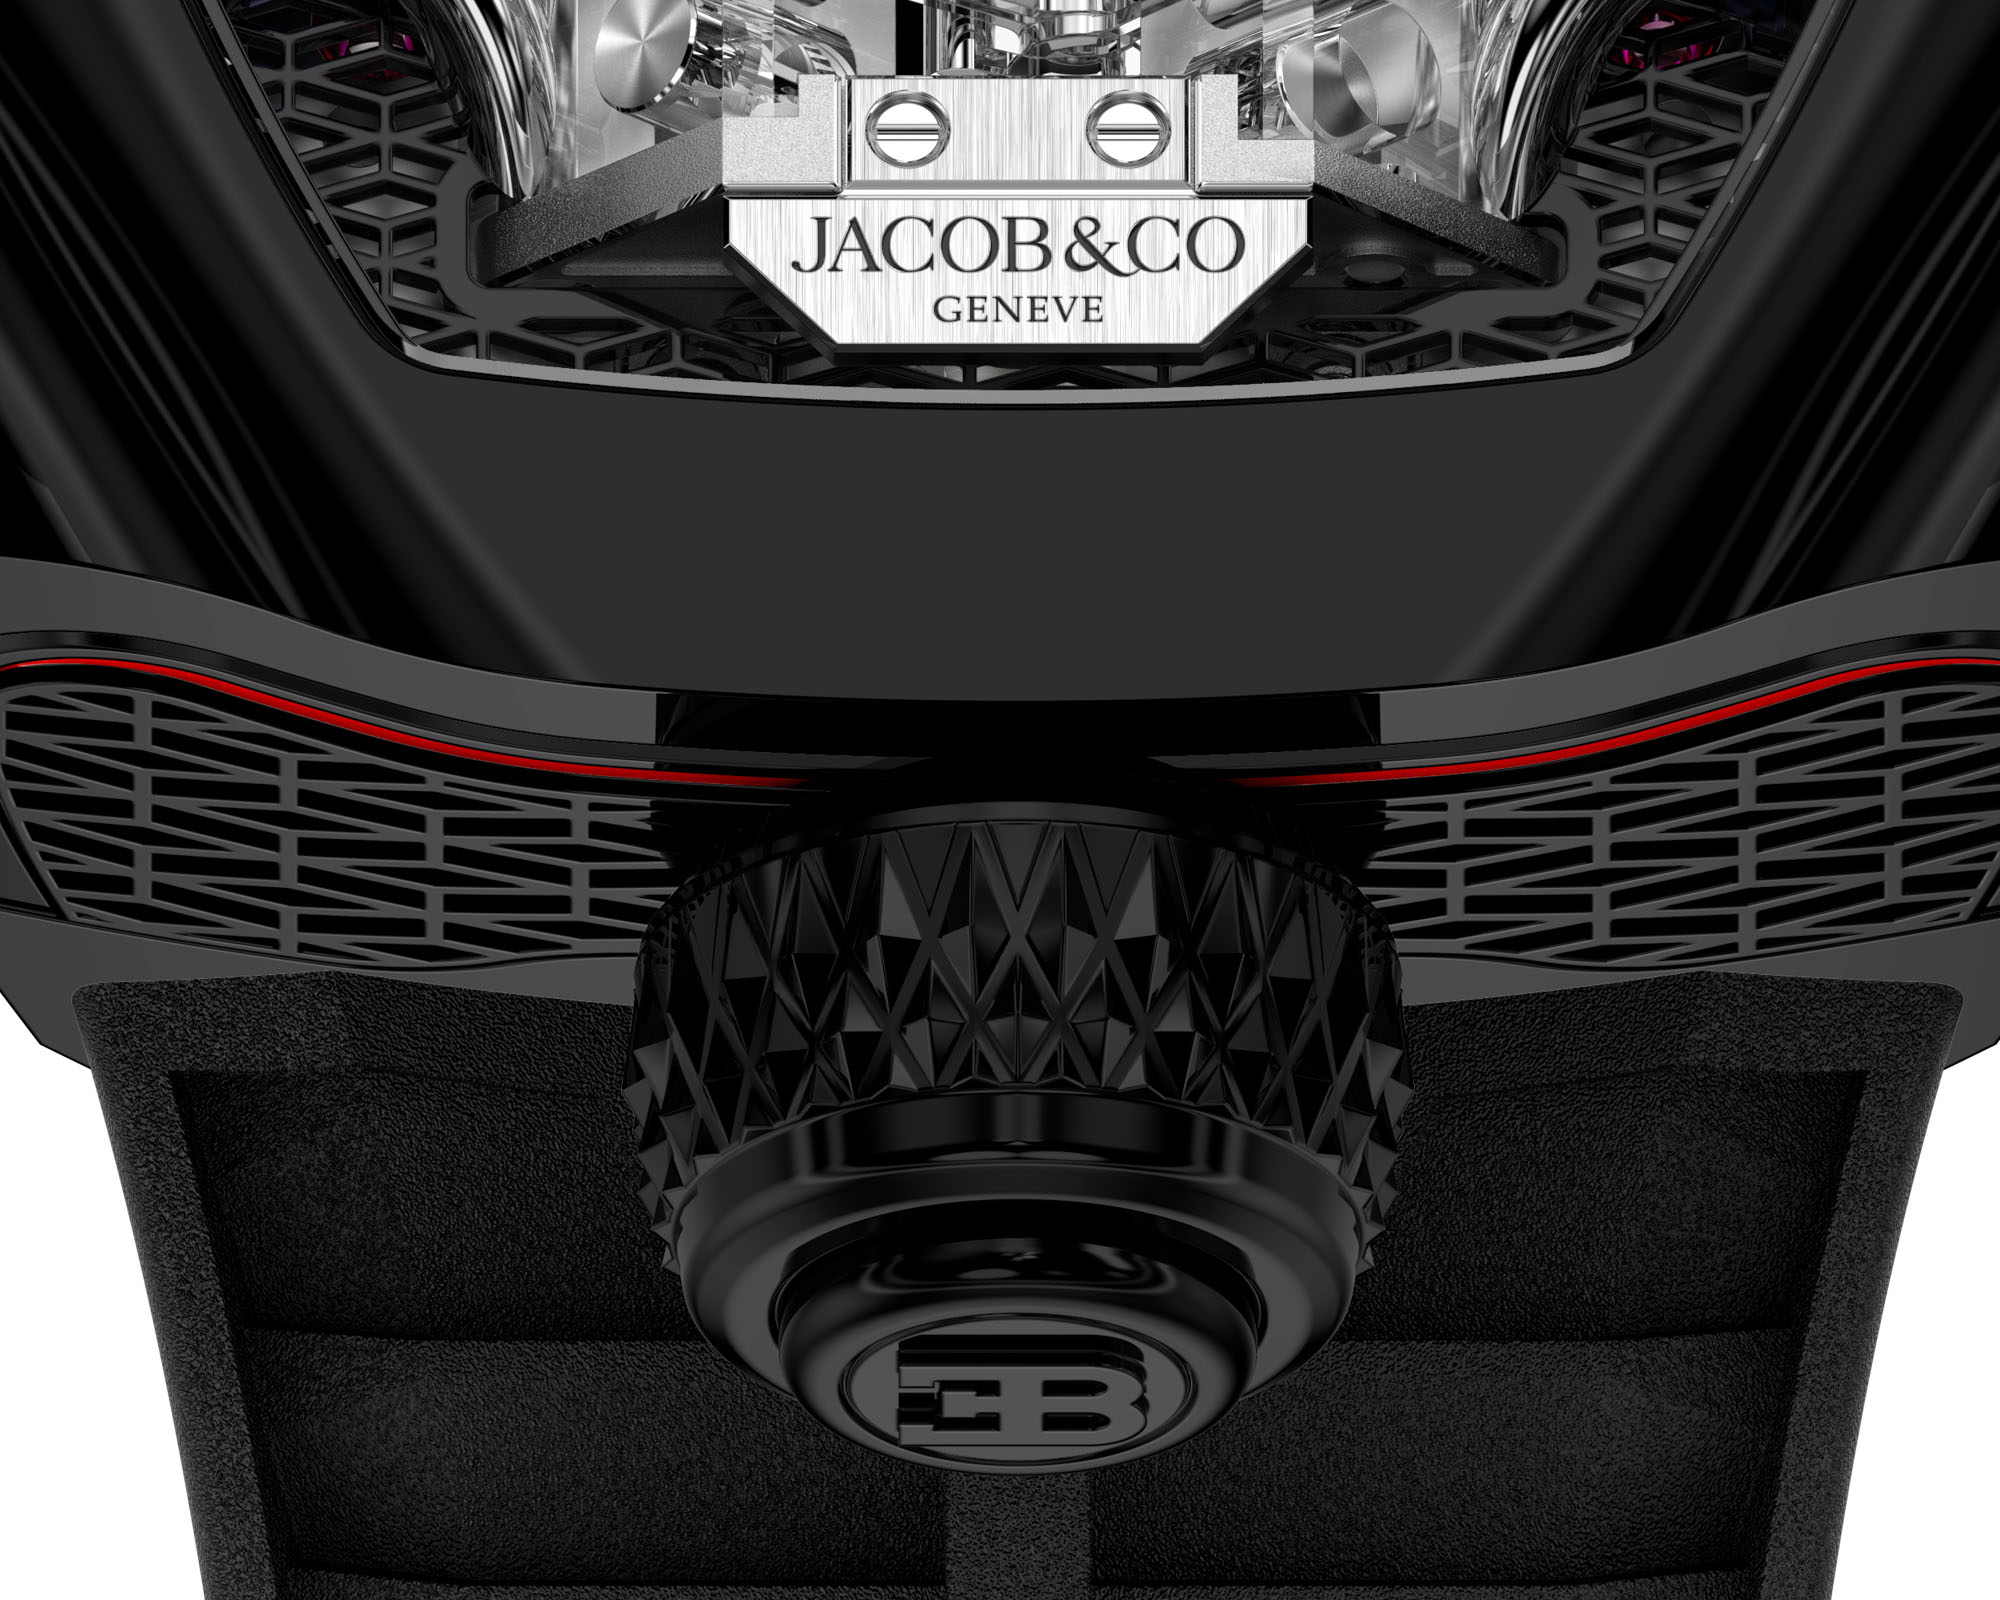 Bugatti Tourbillon: Το ρολόι-θαύμα των 320.000 ευρώ